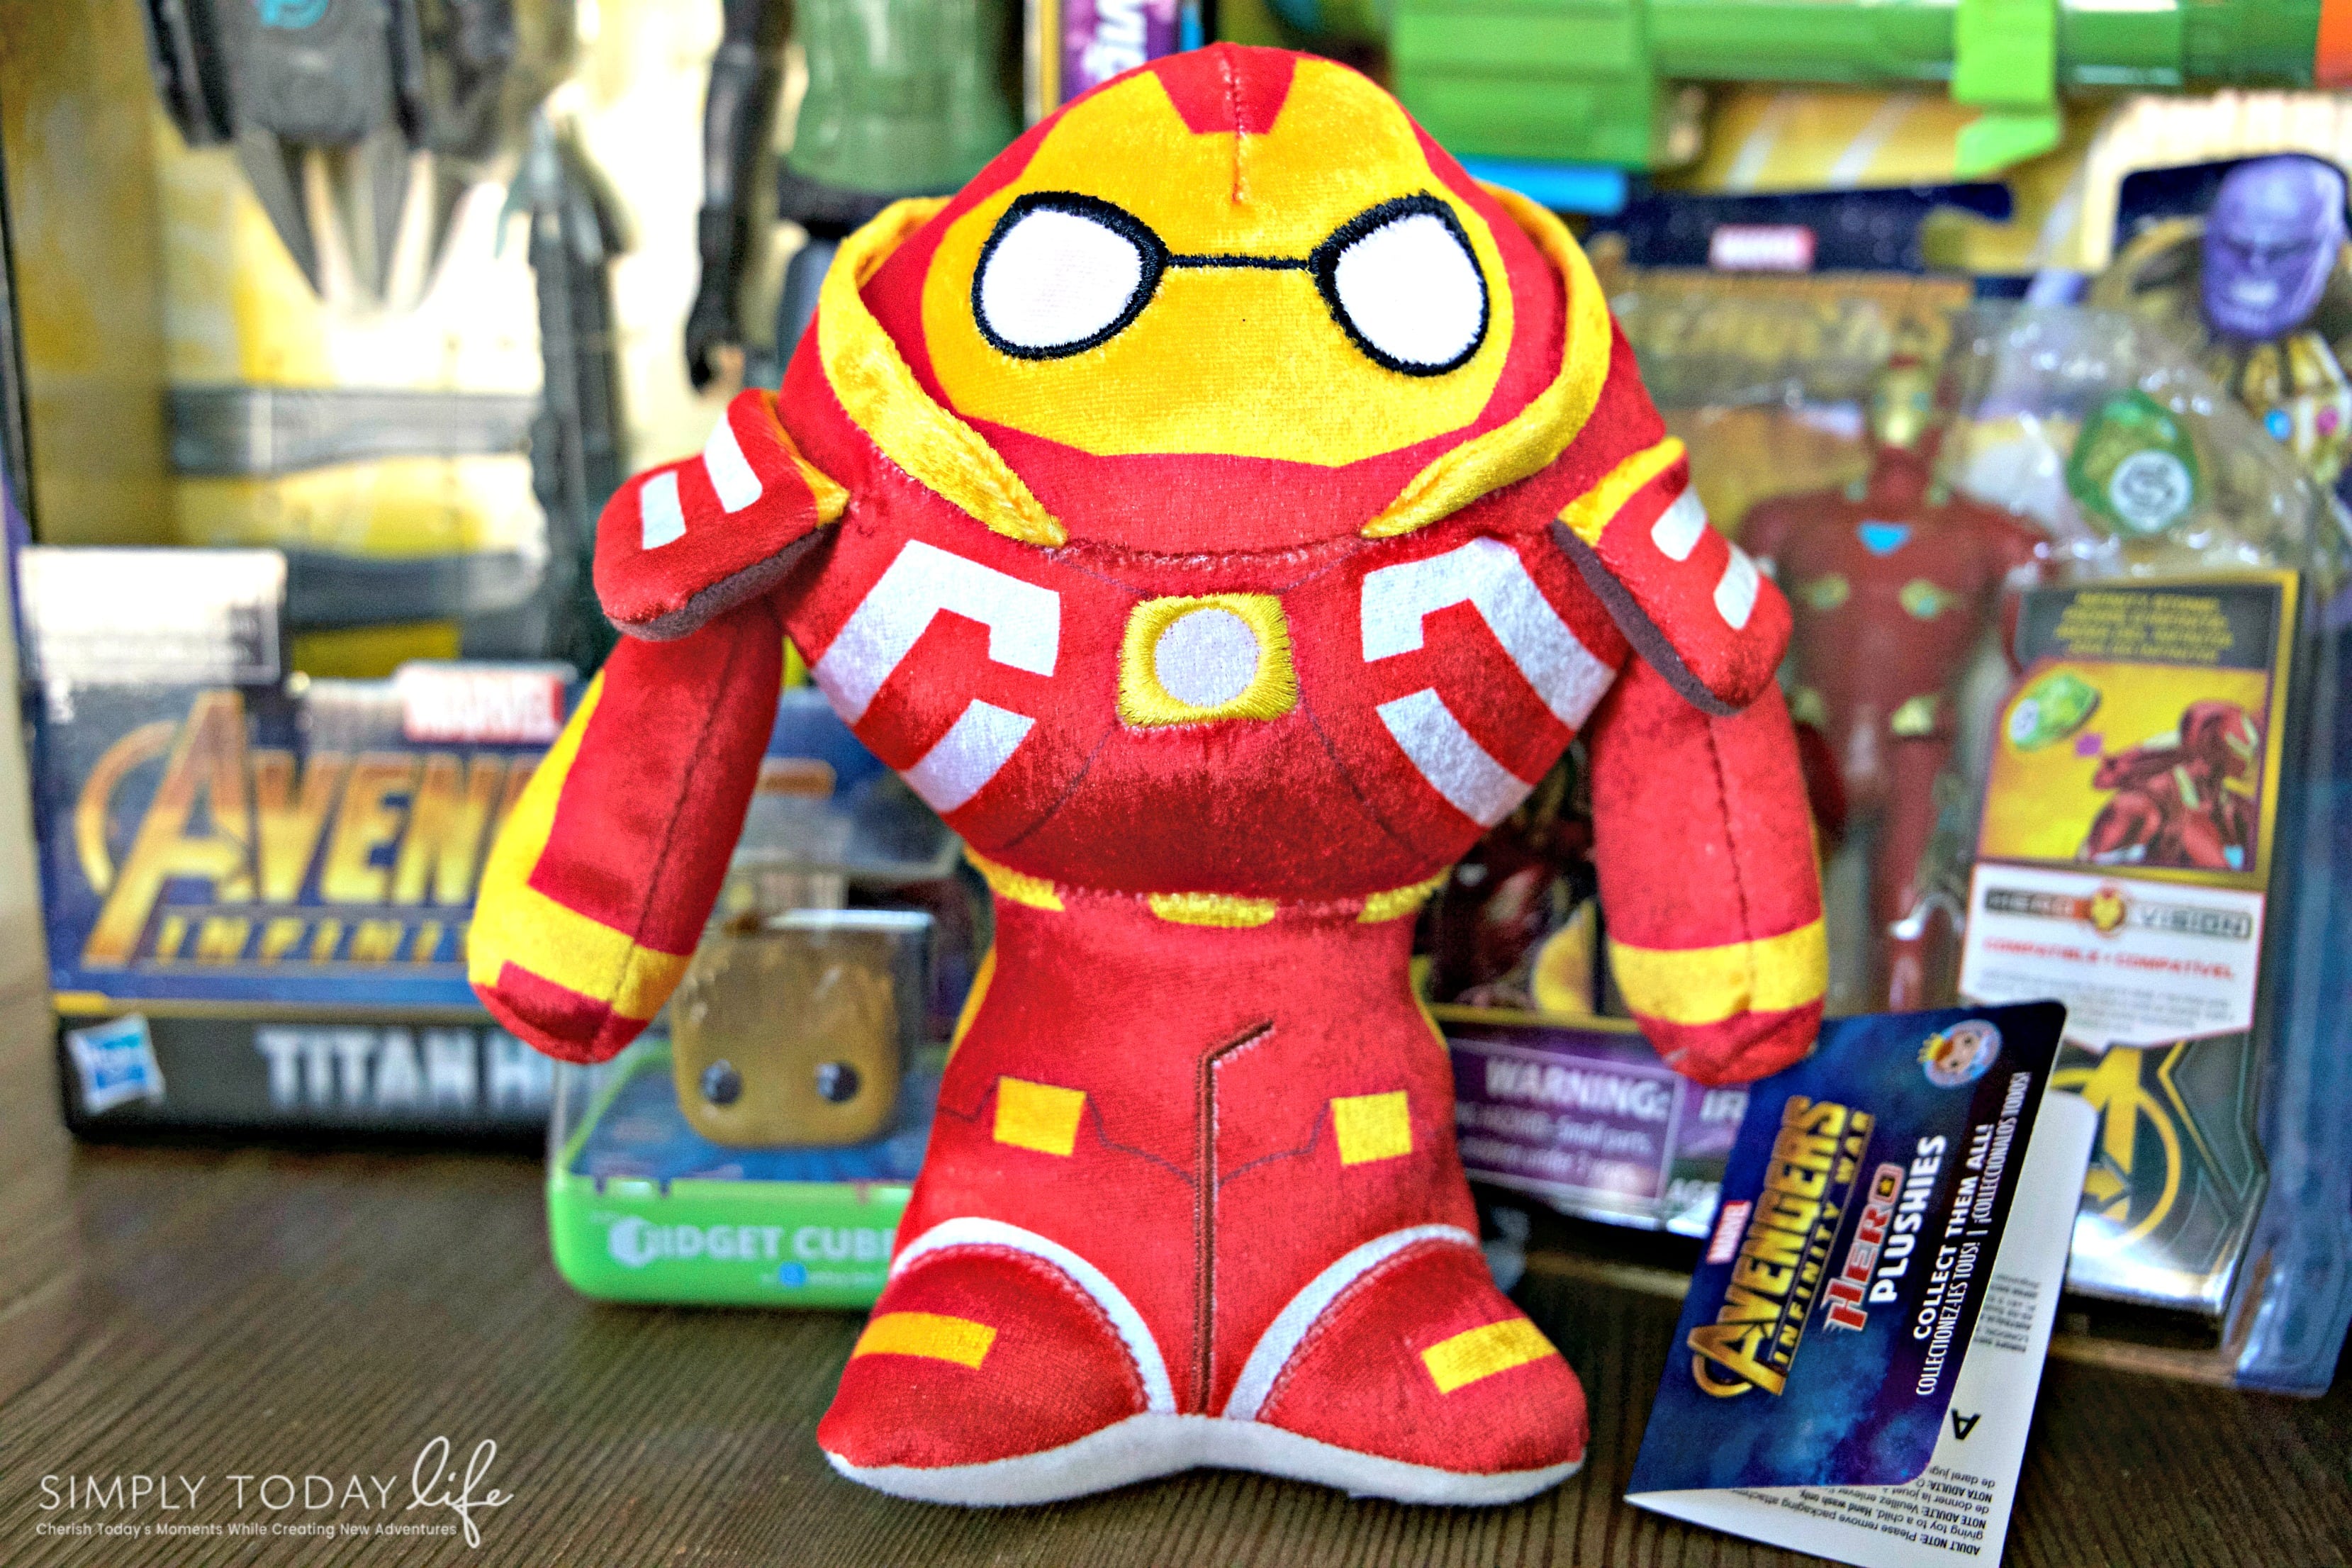 Marvel Avengers infinity War Iron Man Plush Toy For Kids